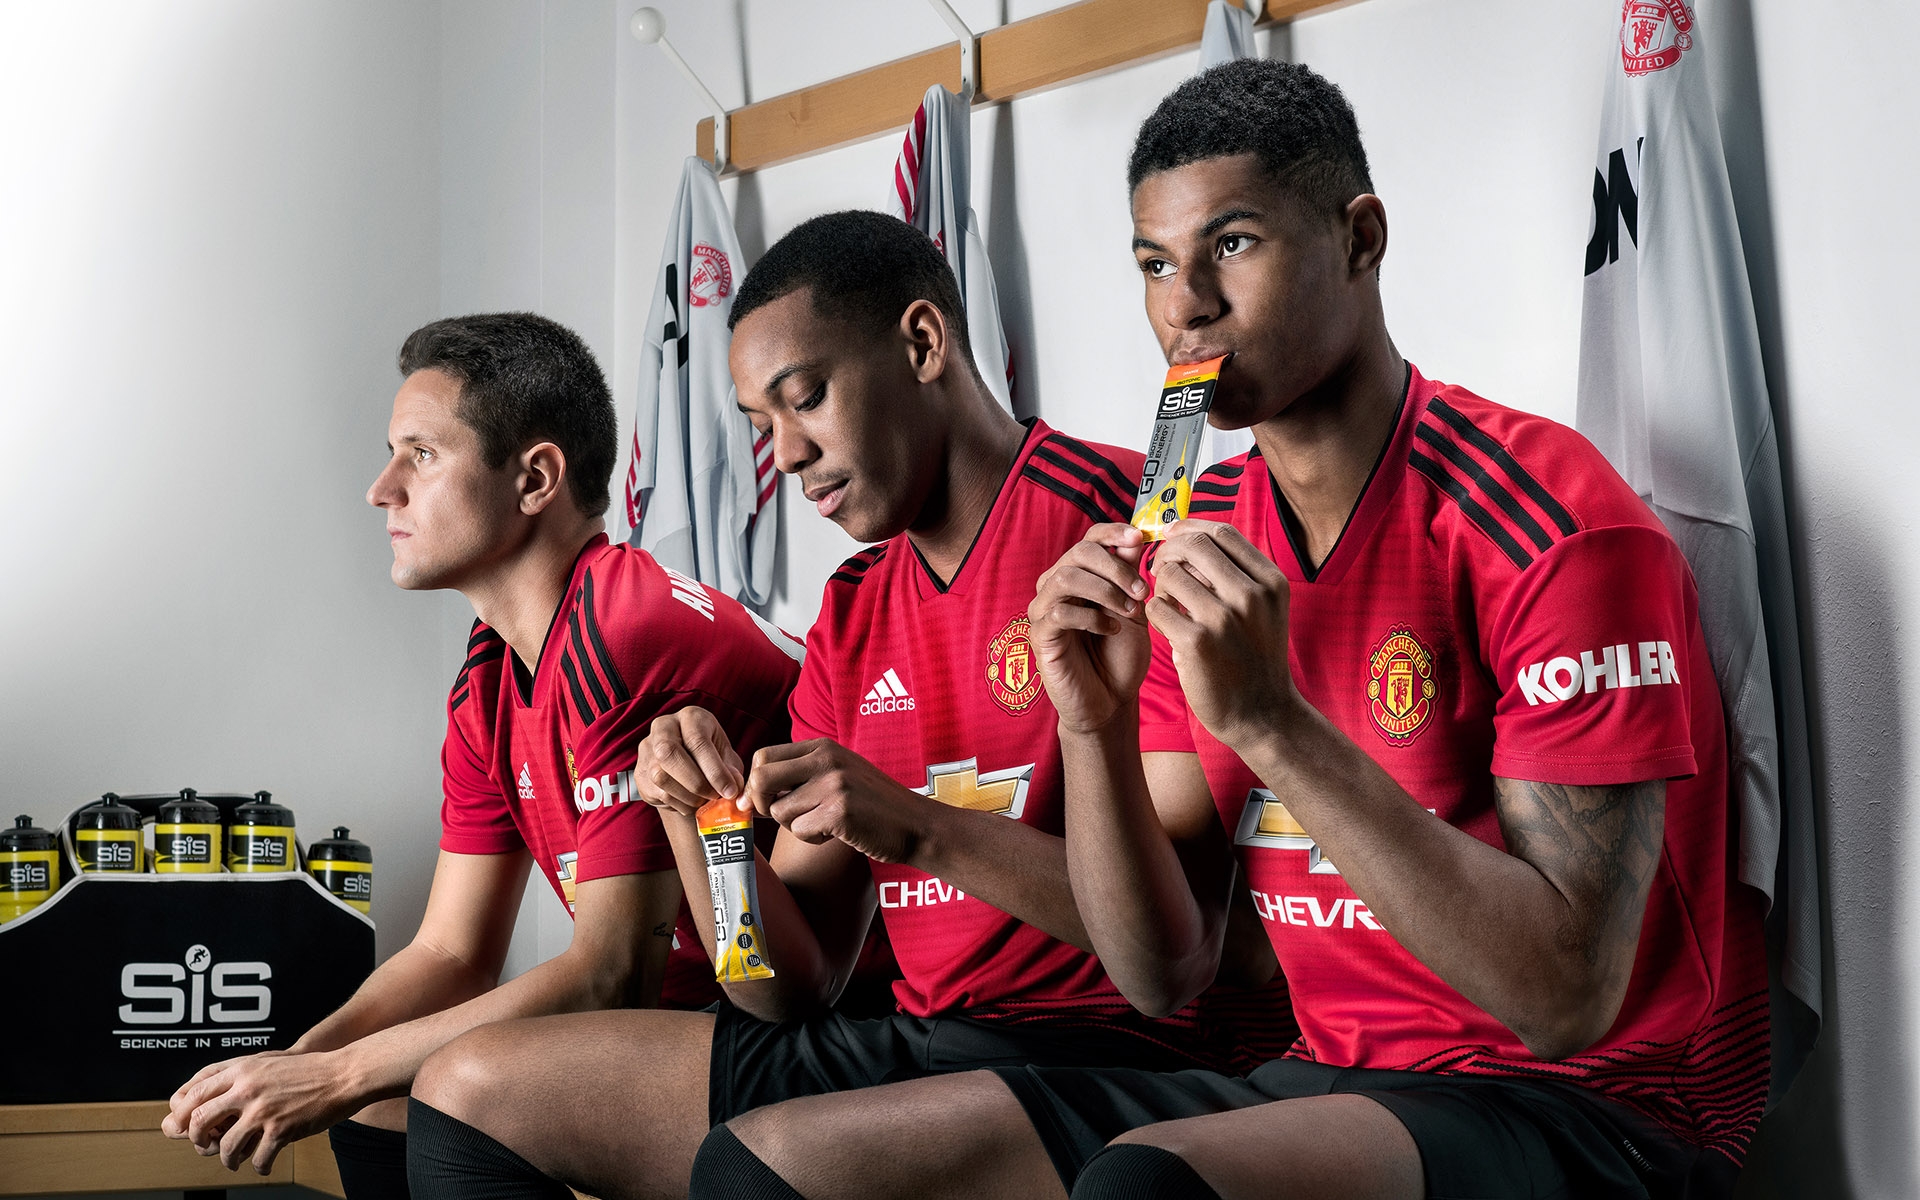 SIS - Science In Sports Campaign Manchester United Rashford, Martial & Herrera ©Paul Cooper